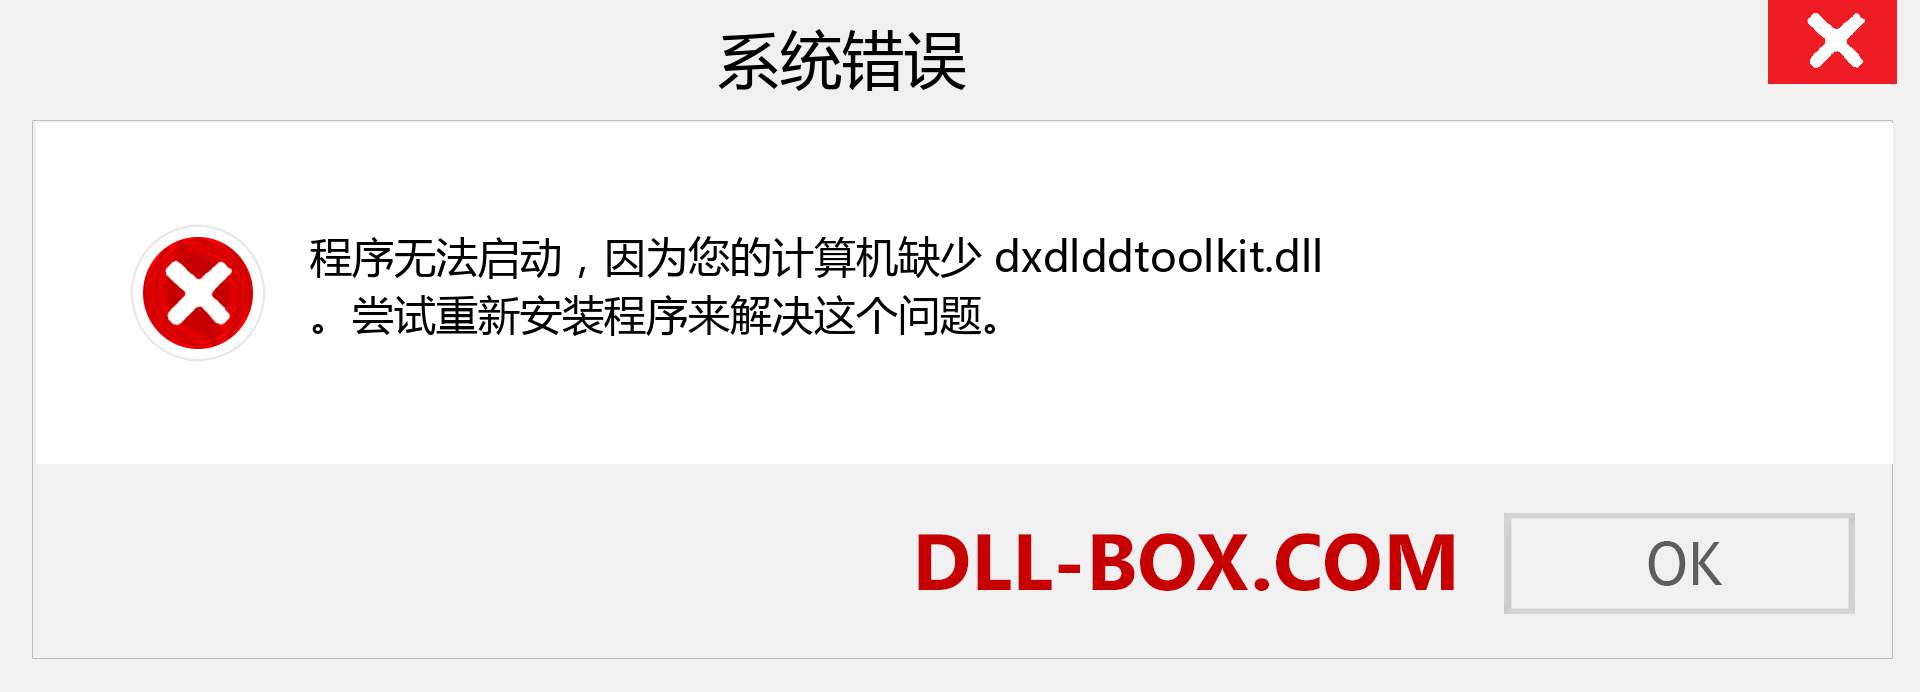 dxdlddtoolkit.dll 文件丢失？。 适用于 Windows 7、8、10 的下载 - 修复 Windows、照片、图像上的 dxdlddtoolkit dll 丢失错误